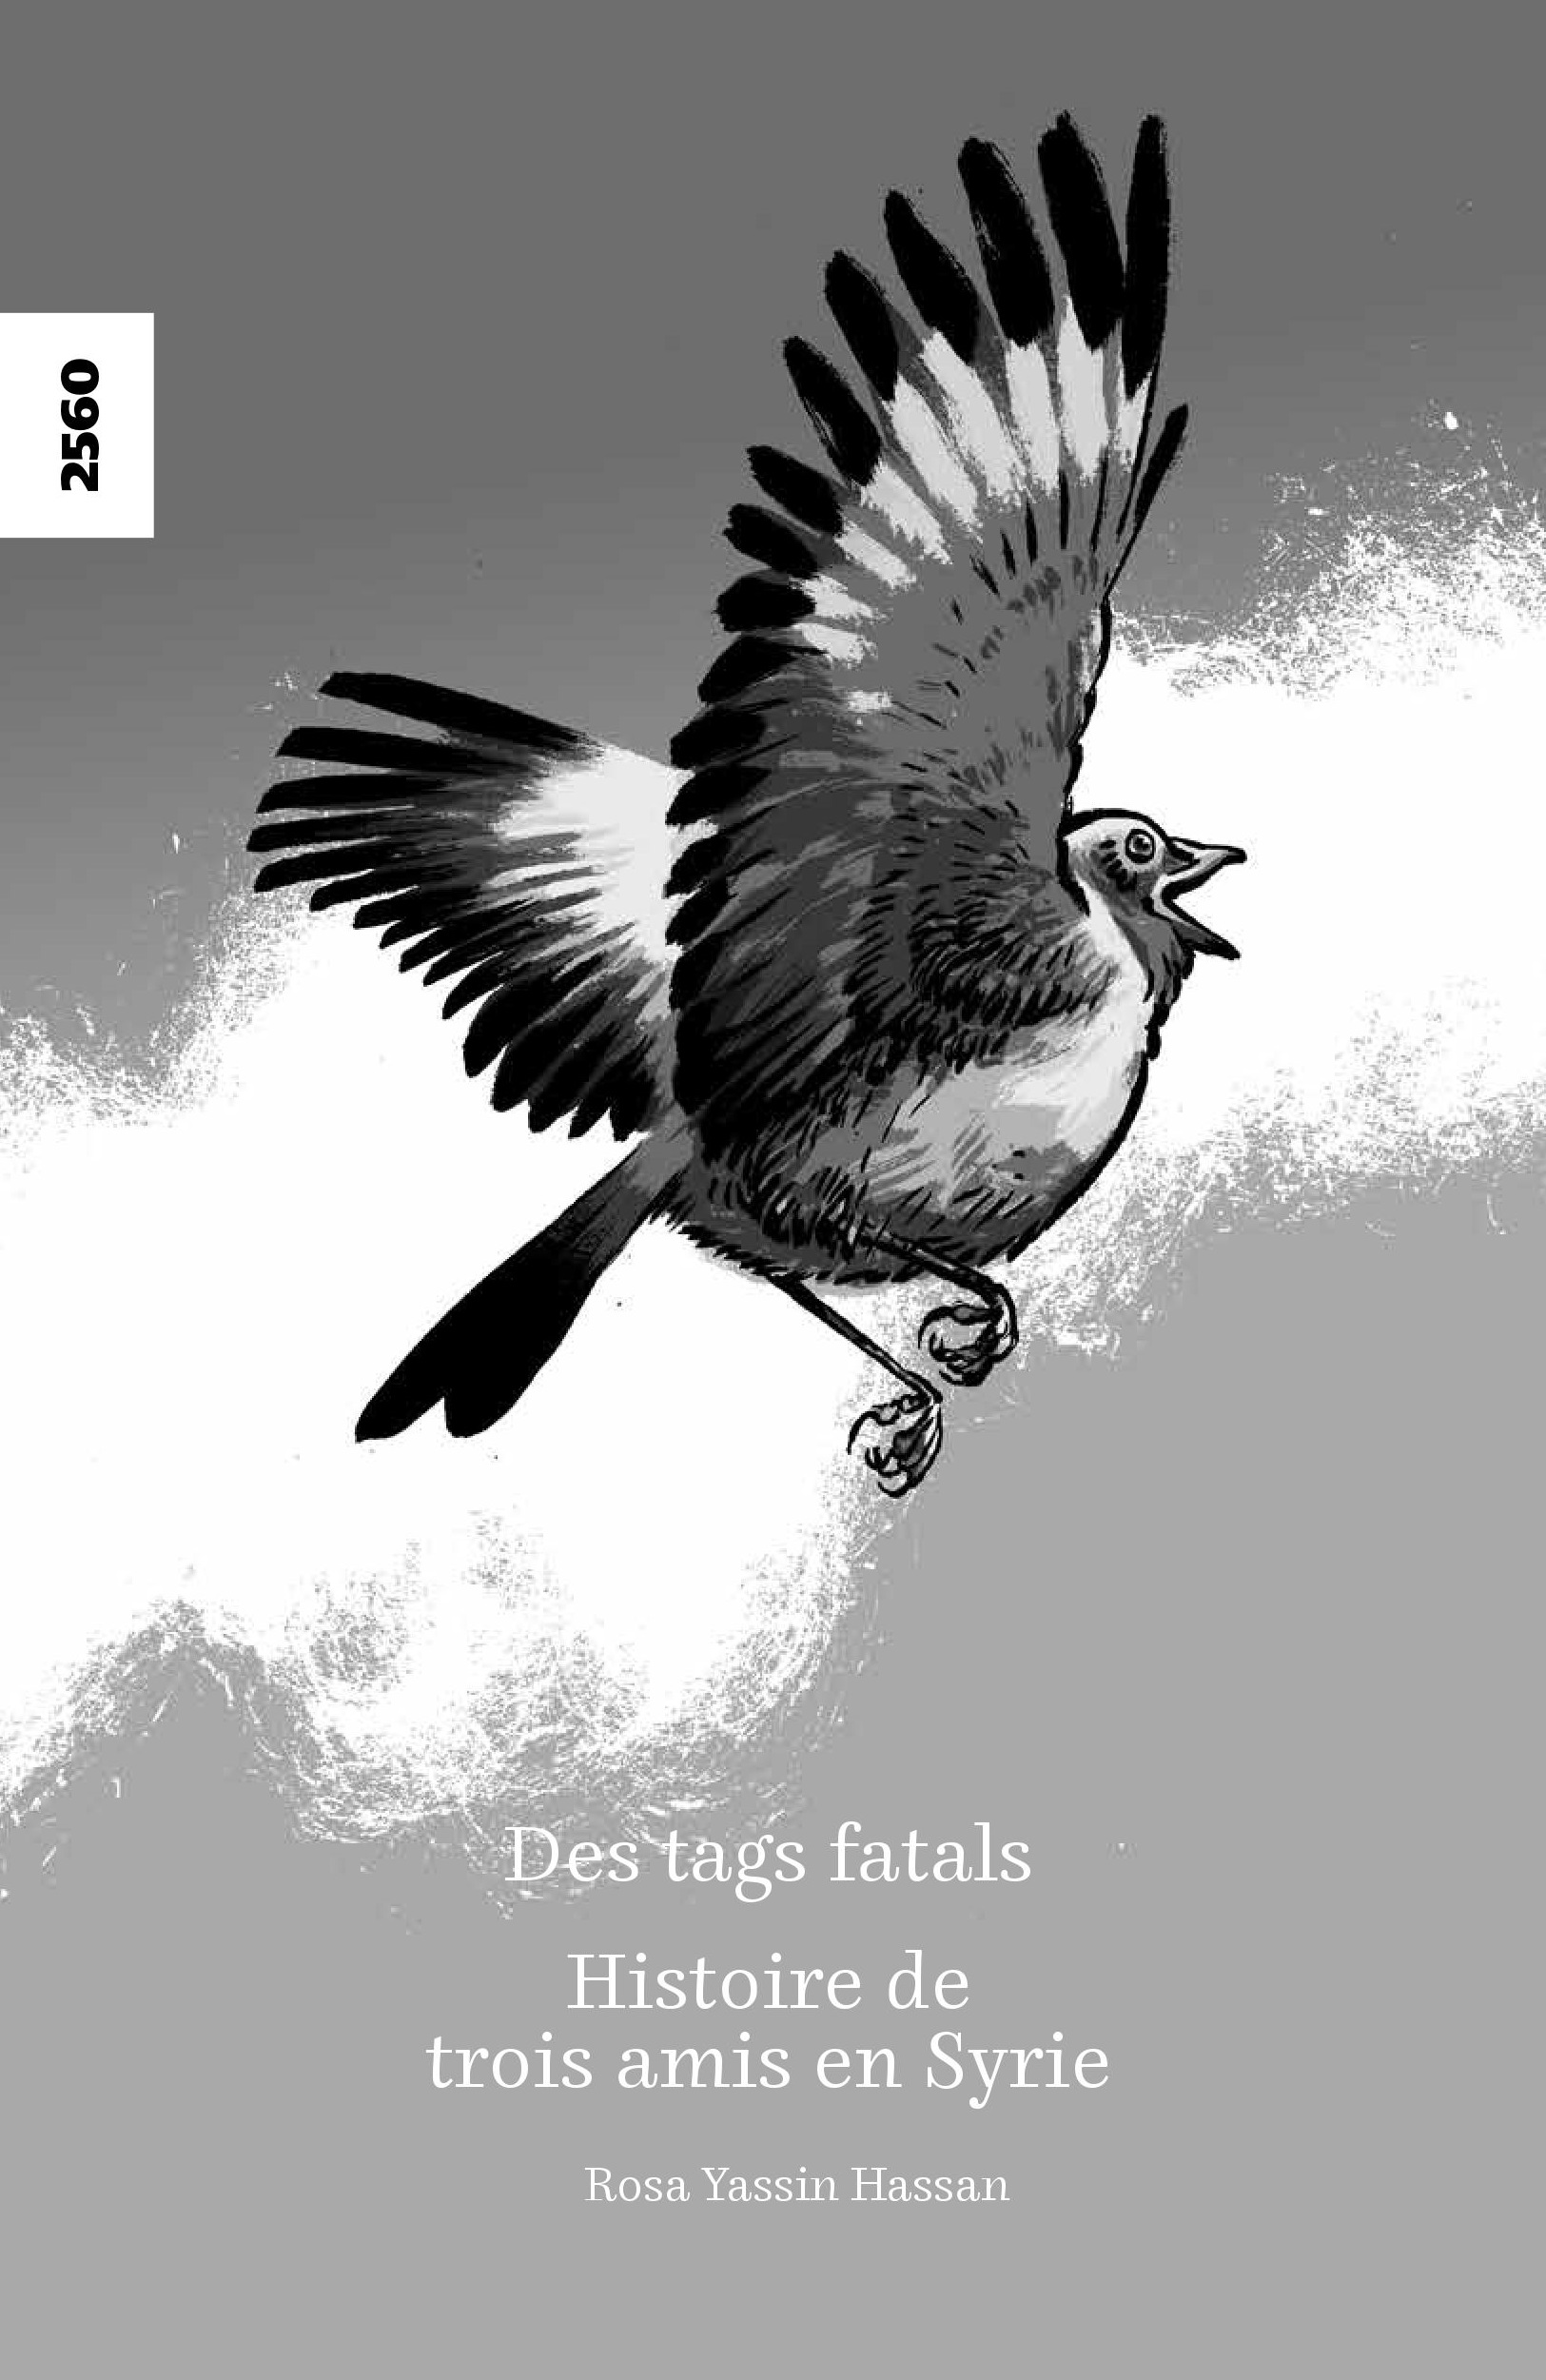 Des tags fatals, un livre de Rosa Yassin Hassan, illustré par Benjamin Guedel, éditions de l'OSL, politique, migration, syrie